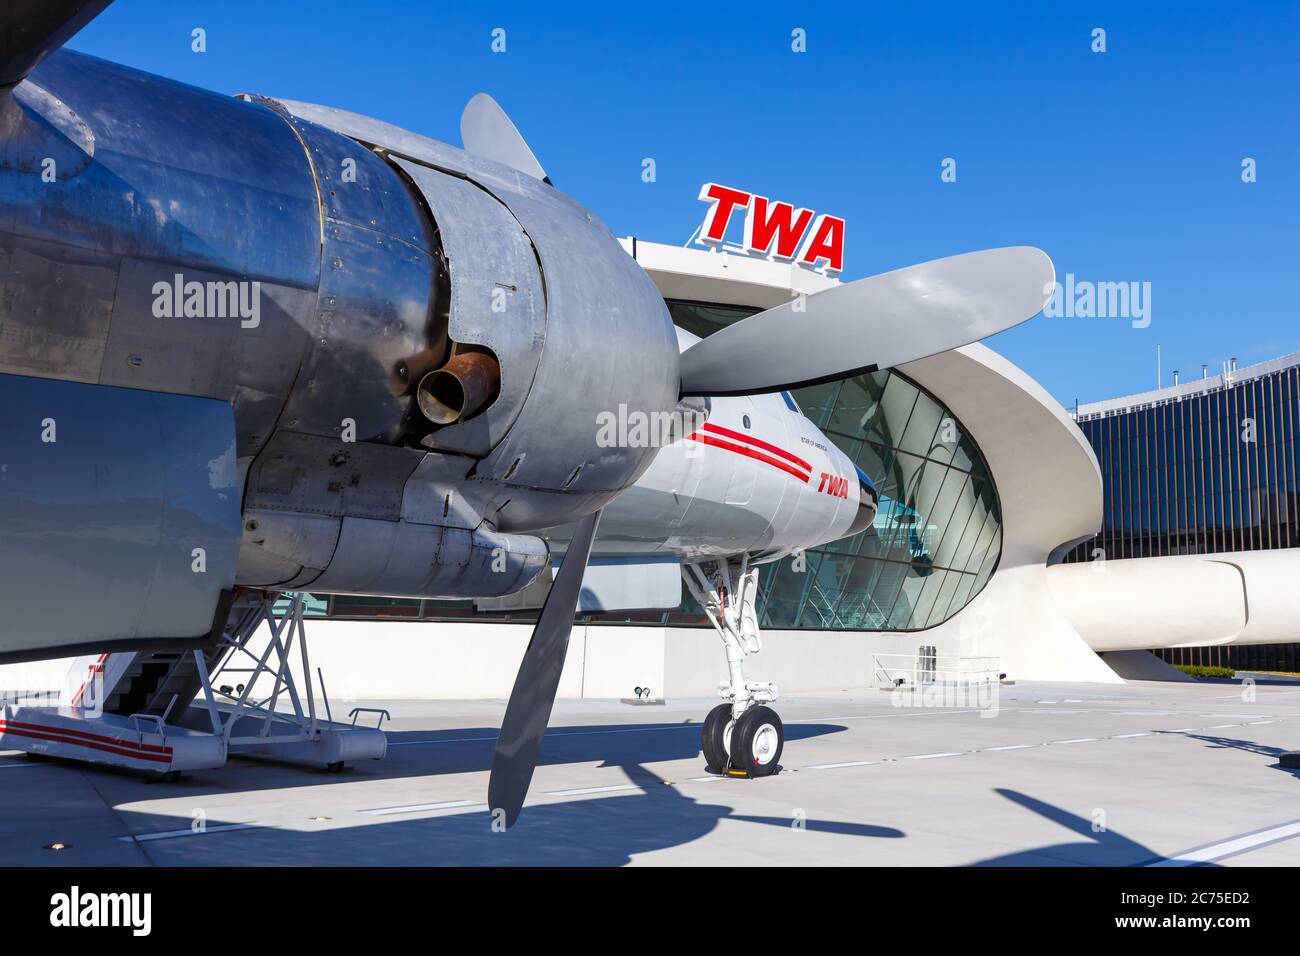 New York City, New York - 29 février 2020 : TWA Trans World Airlines Lockheed L1649A avion Starliner aéroport New York JFK aux États-Unis. Banque D'Images